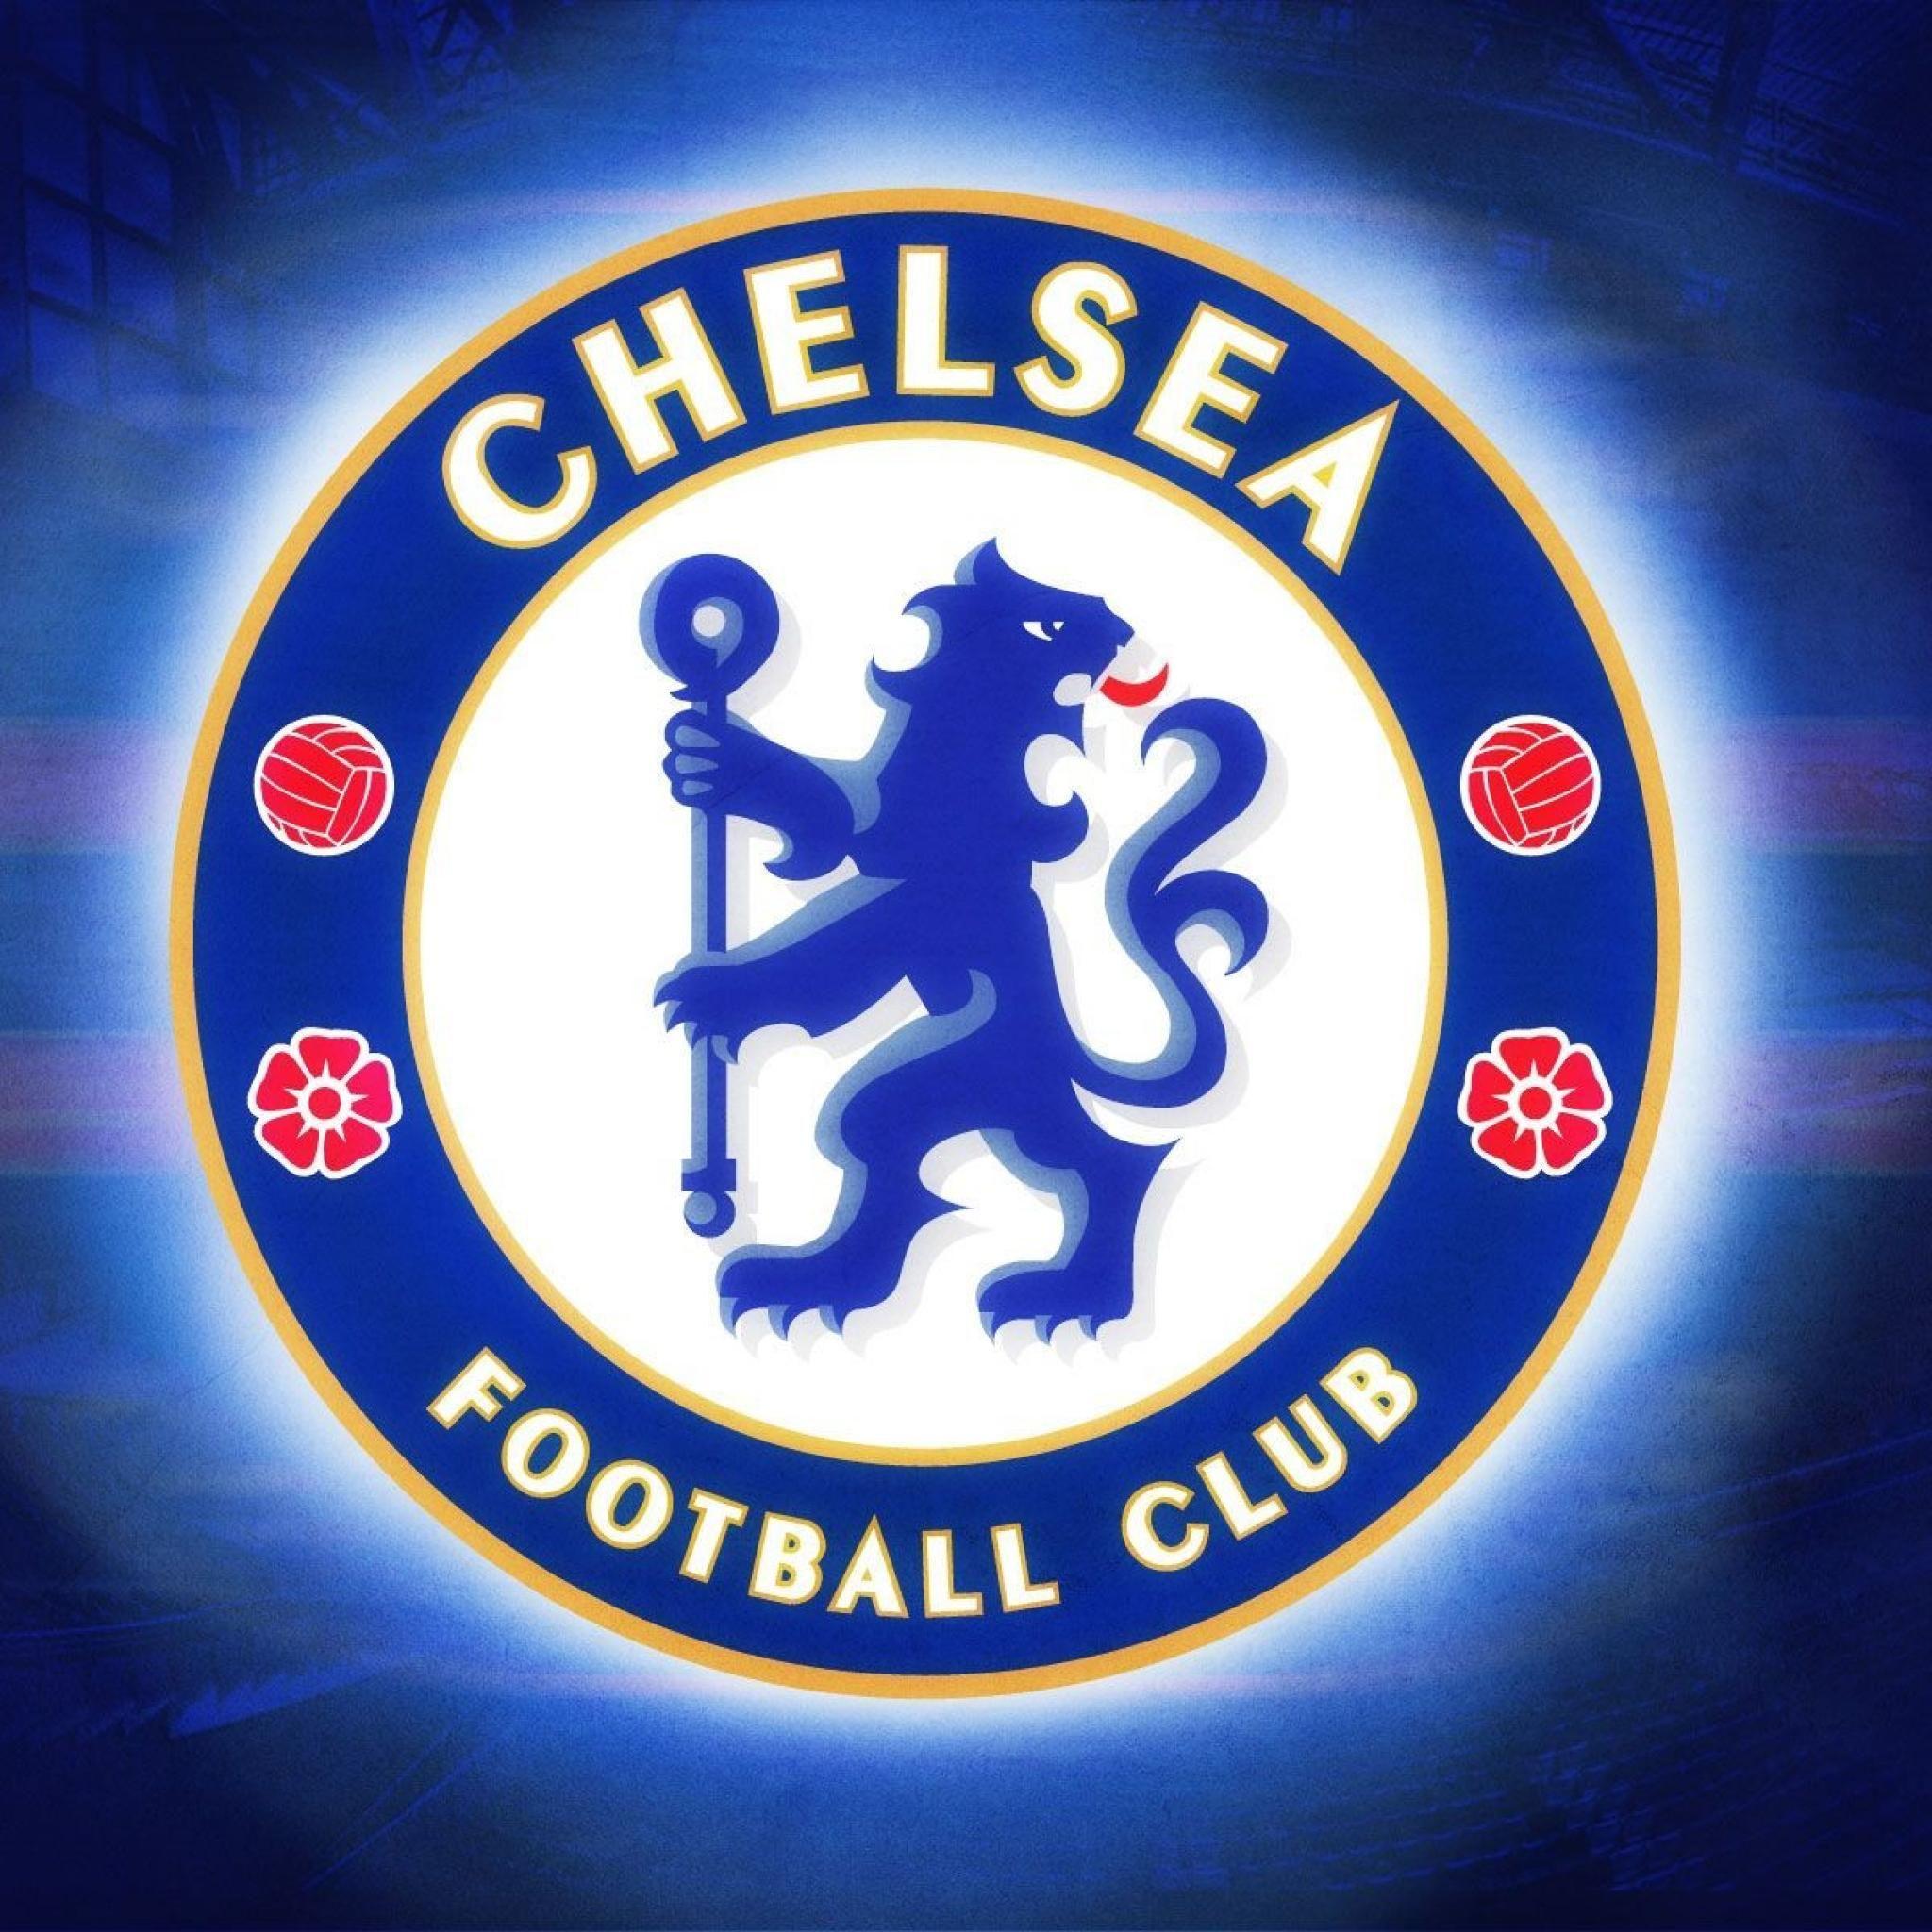 FC Logo - chelsea fc logo - Free Large Images | Happy | Pinterest | Chelsea FC ...